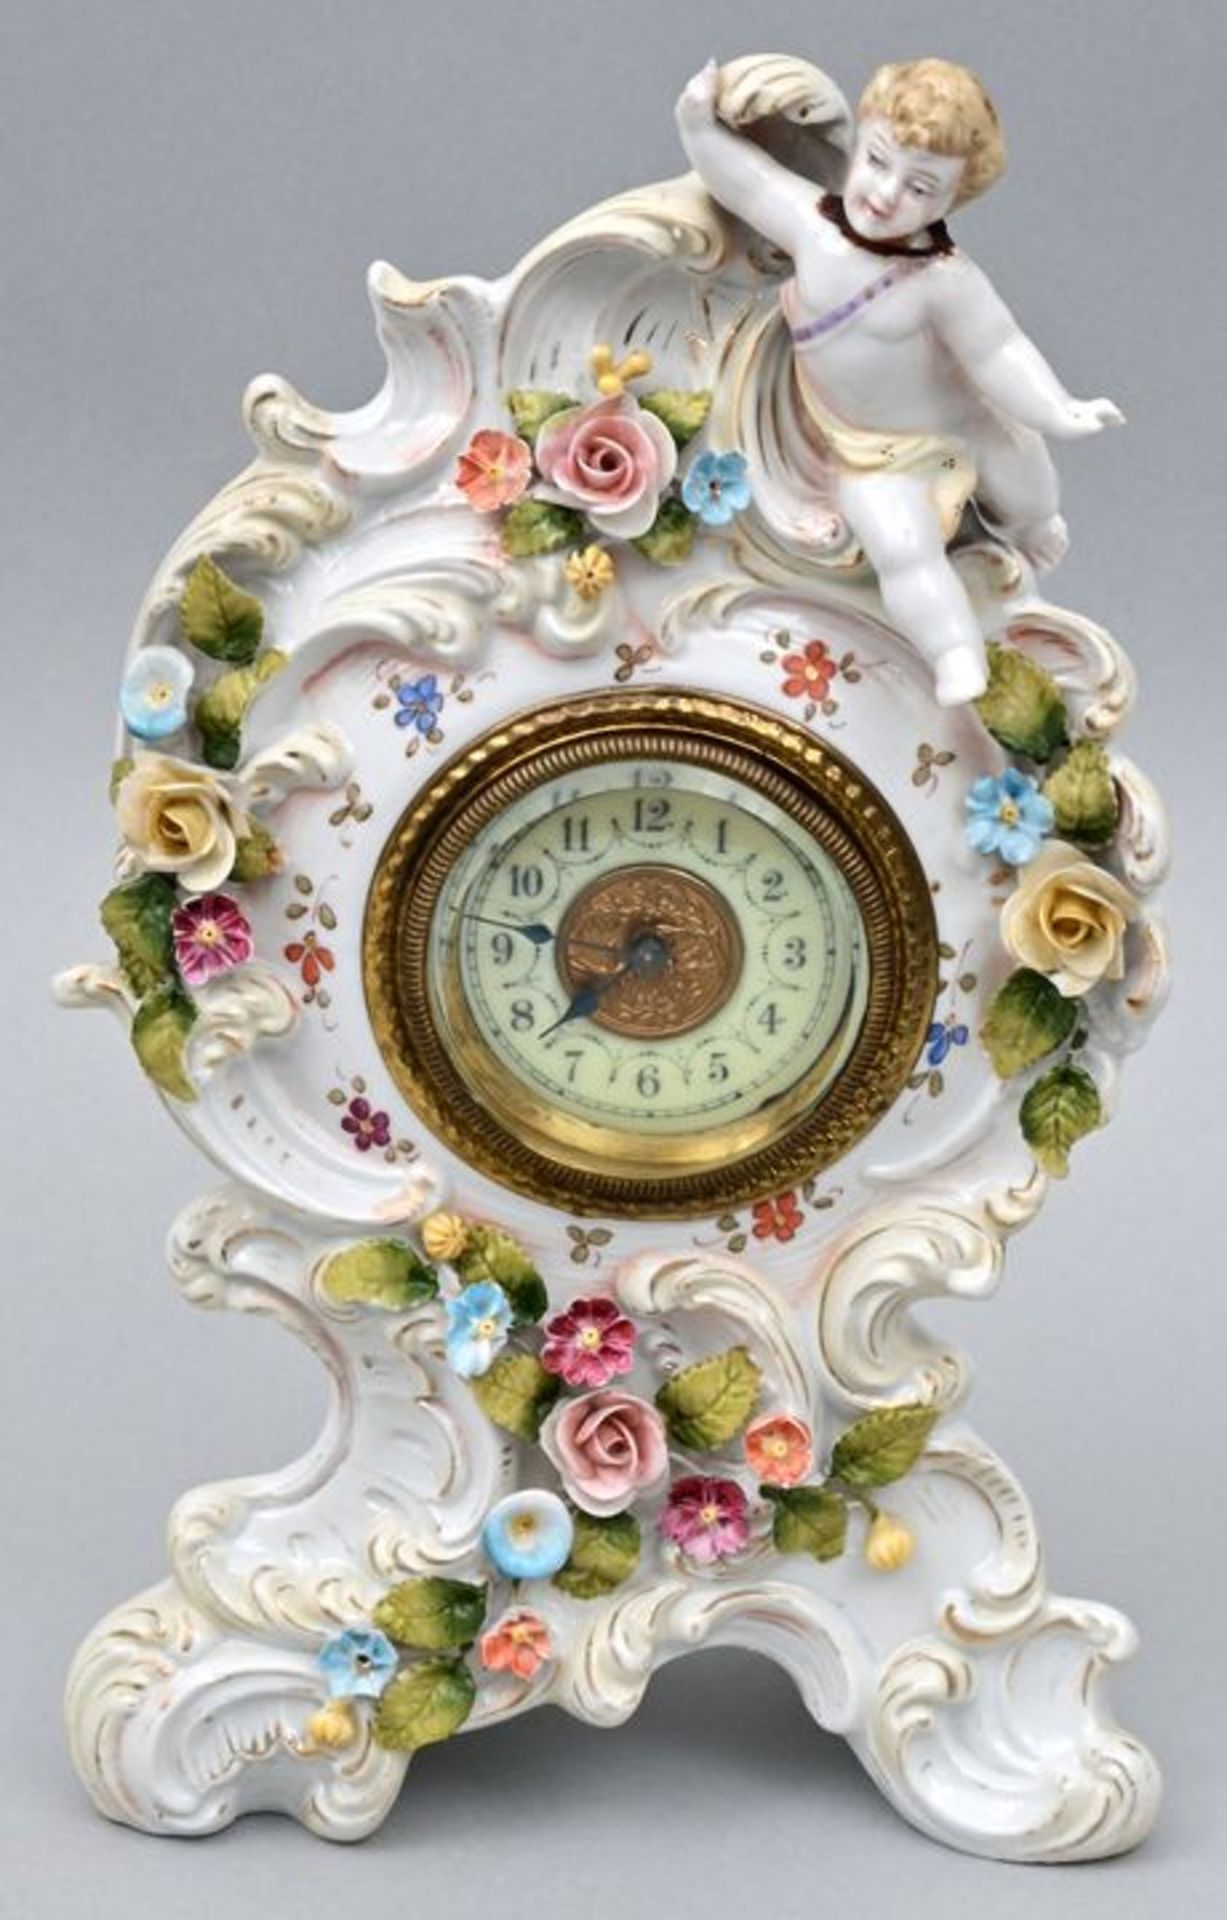 Porzellanuhr mit Putto / Porcelain clock